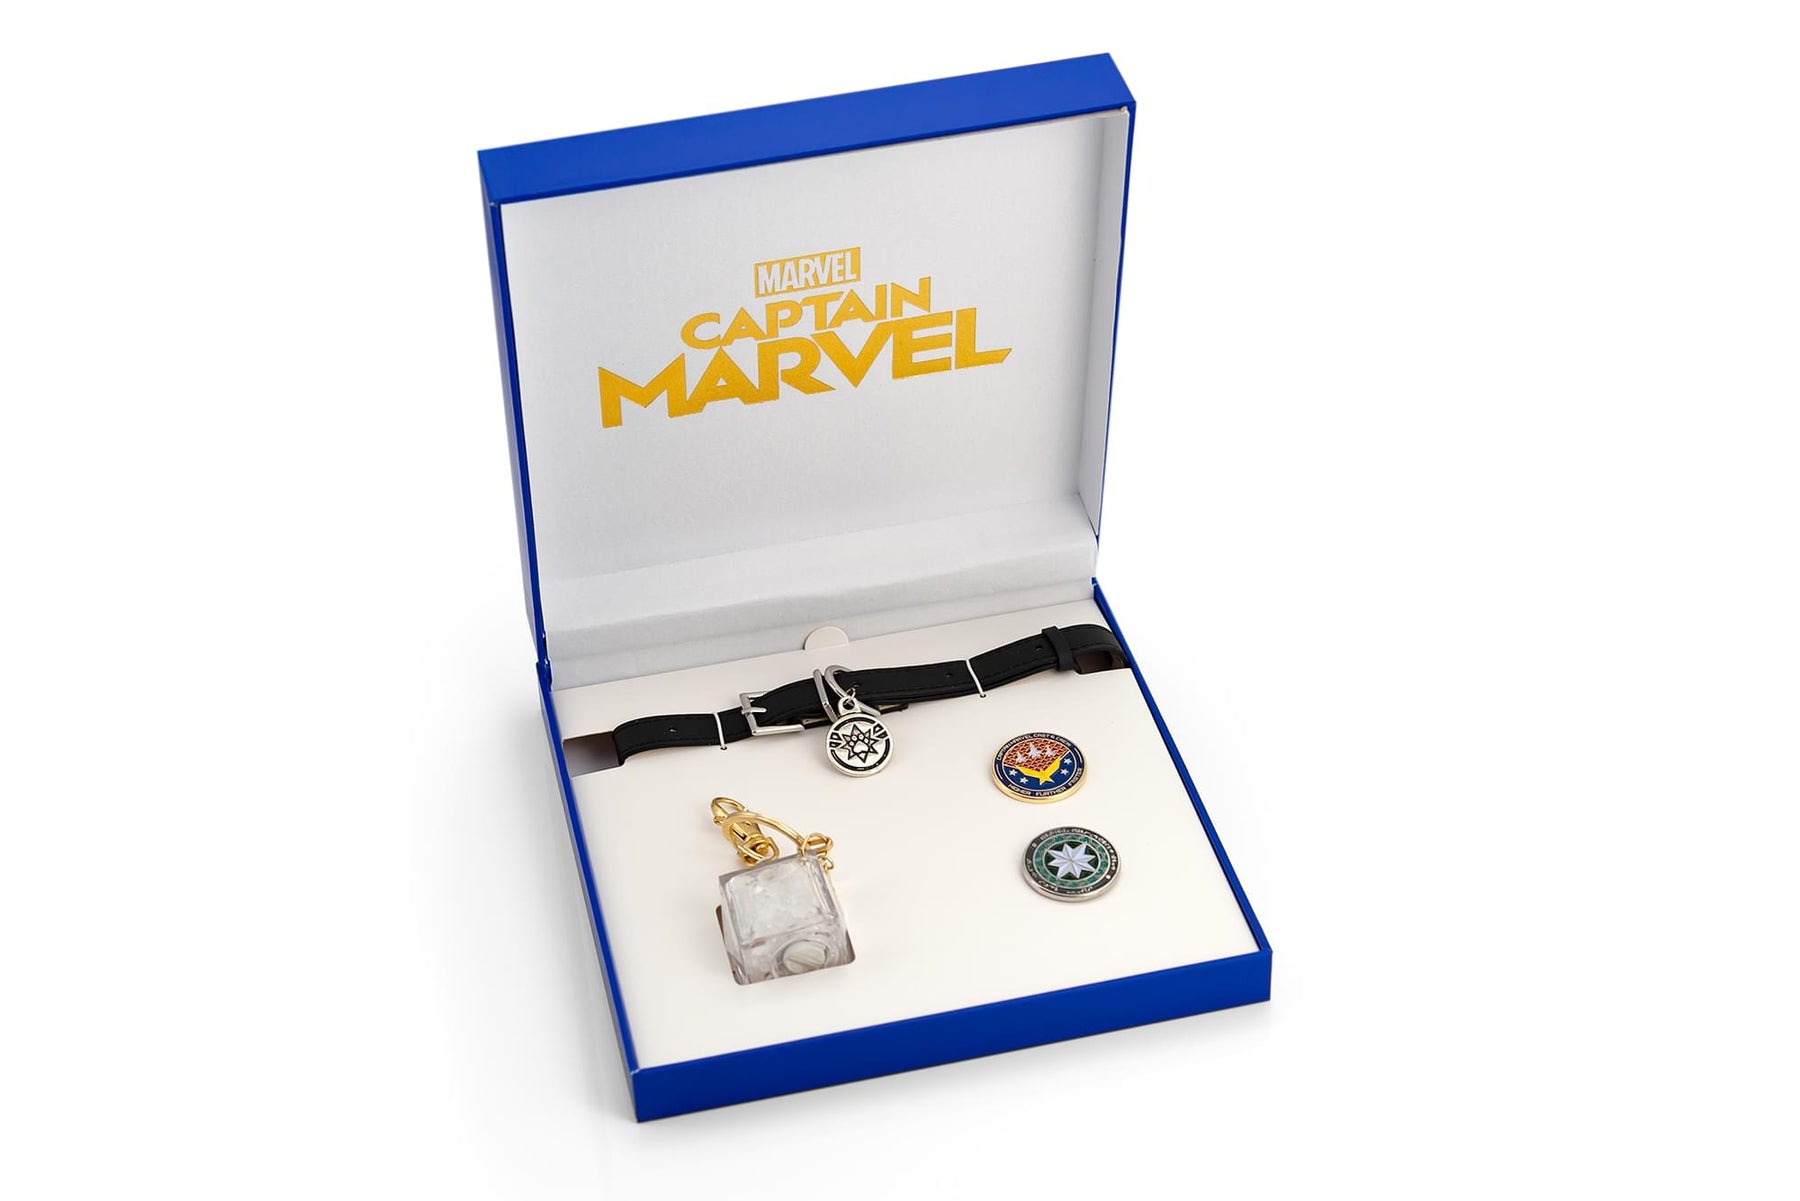 Marvel's Captain Marvel Exclusive Goose Collar Choker | Includes Bonus Tesseract